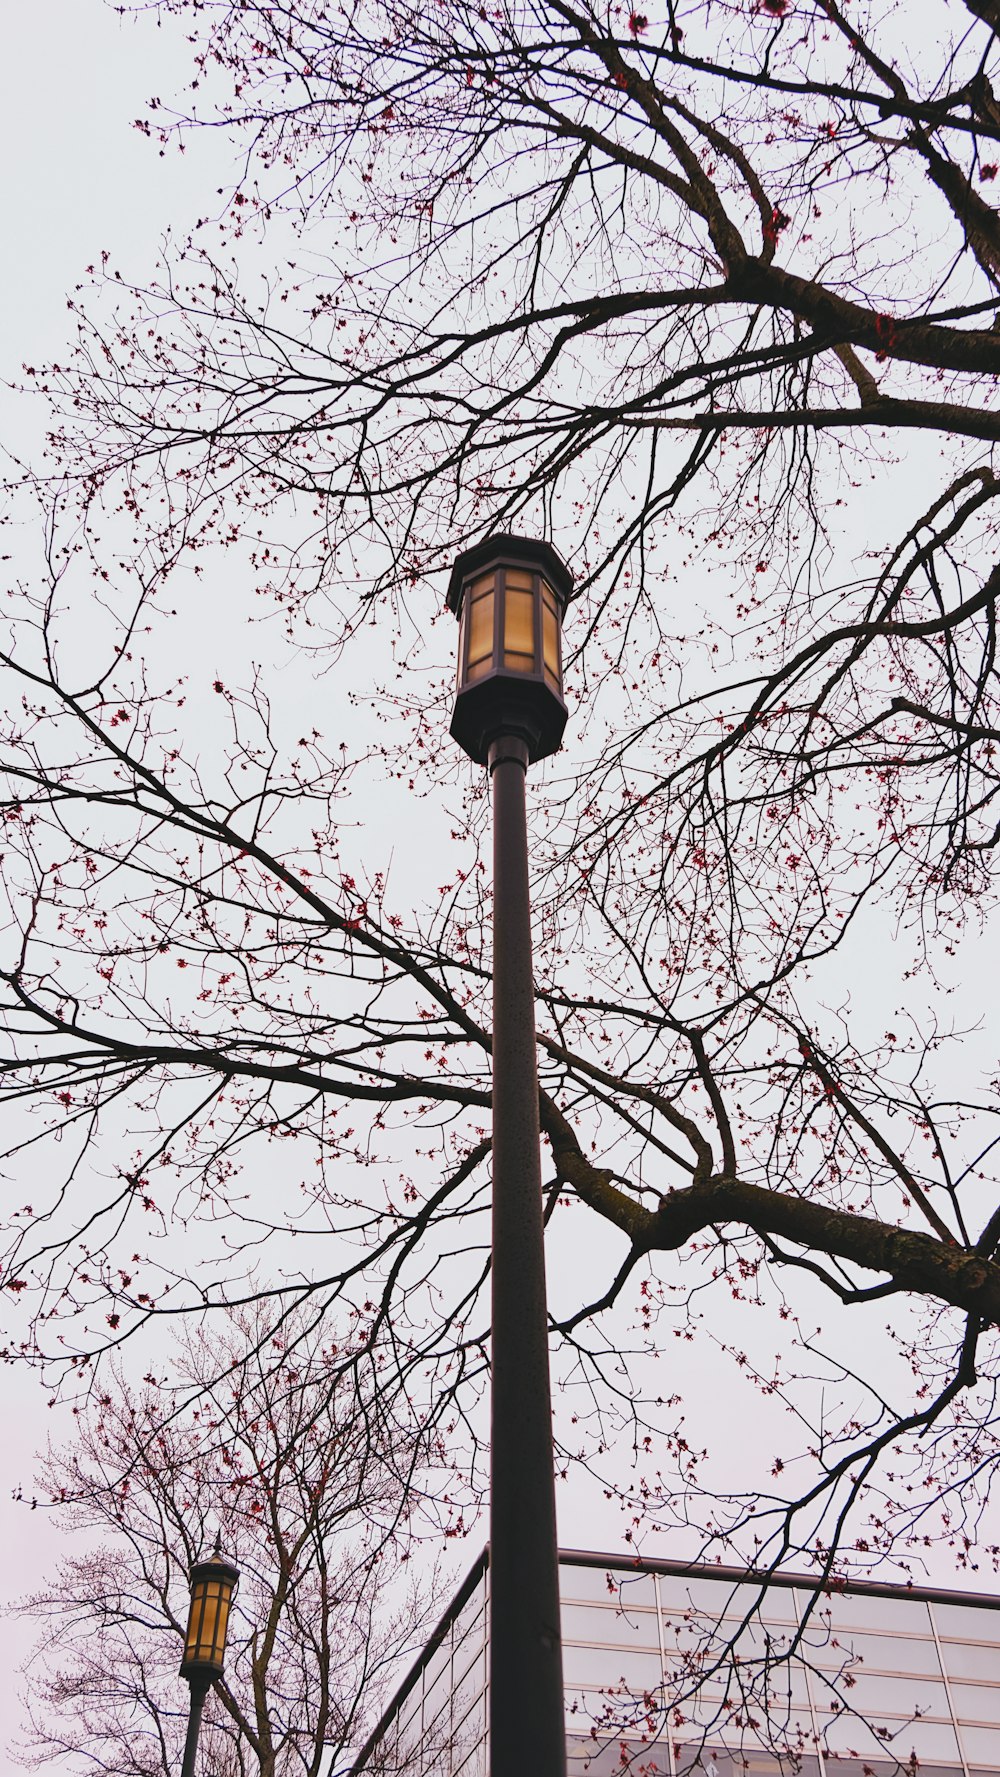 a street light sitting next to a tree